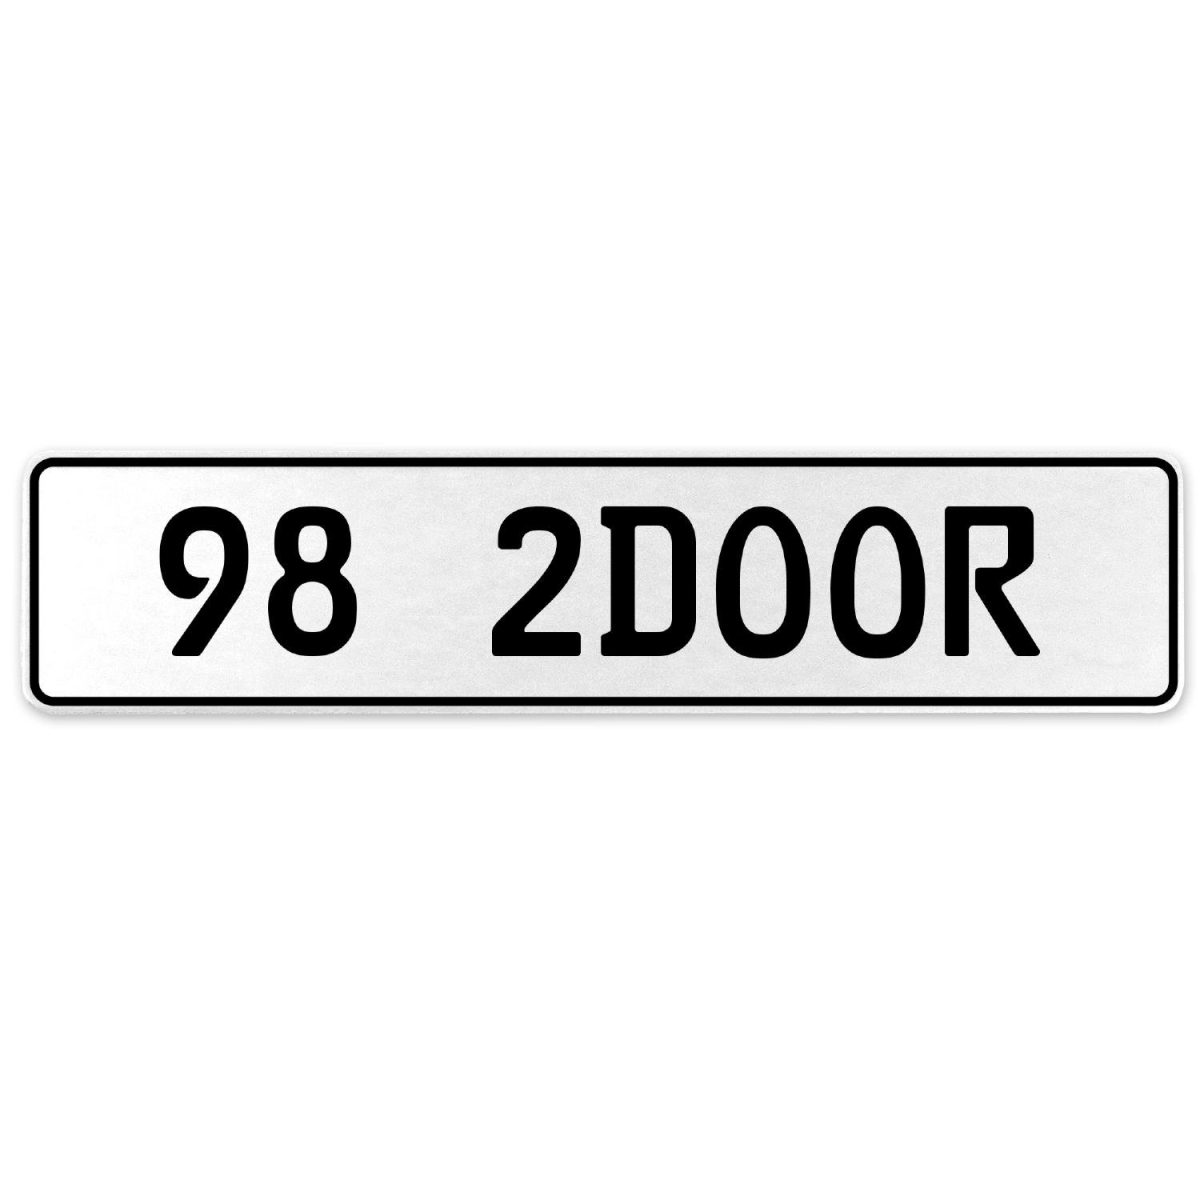 98 2door - White Aluminum Street Sign Mancave Euro Plate Name Door Sign Wall